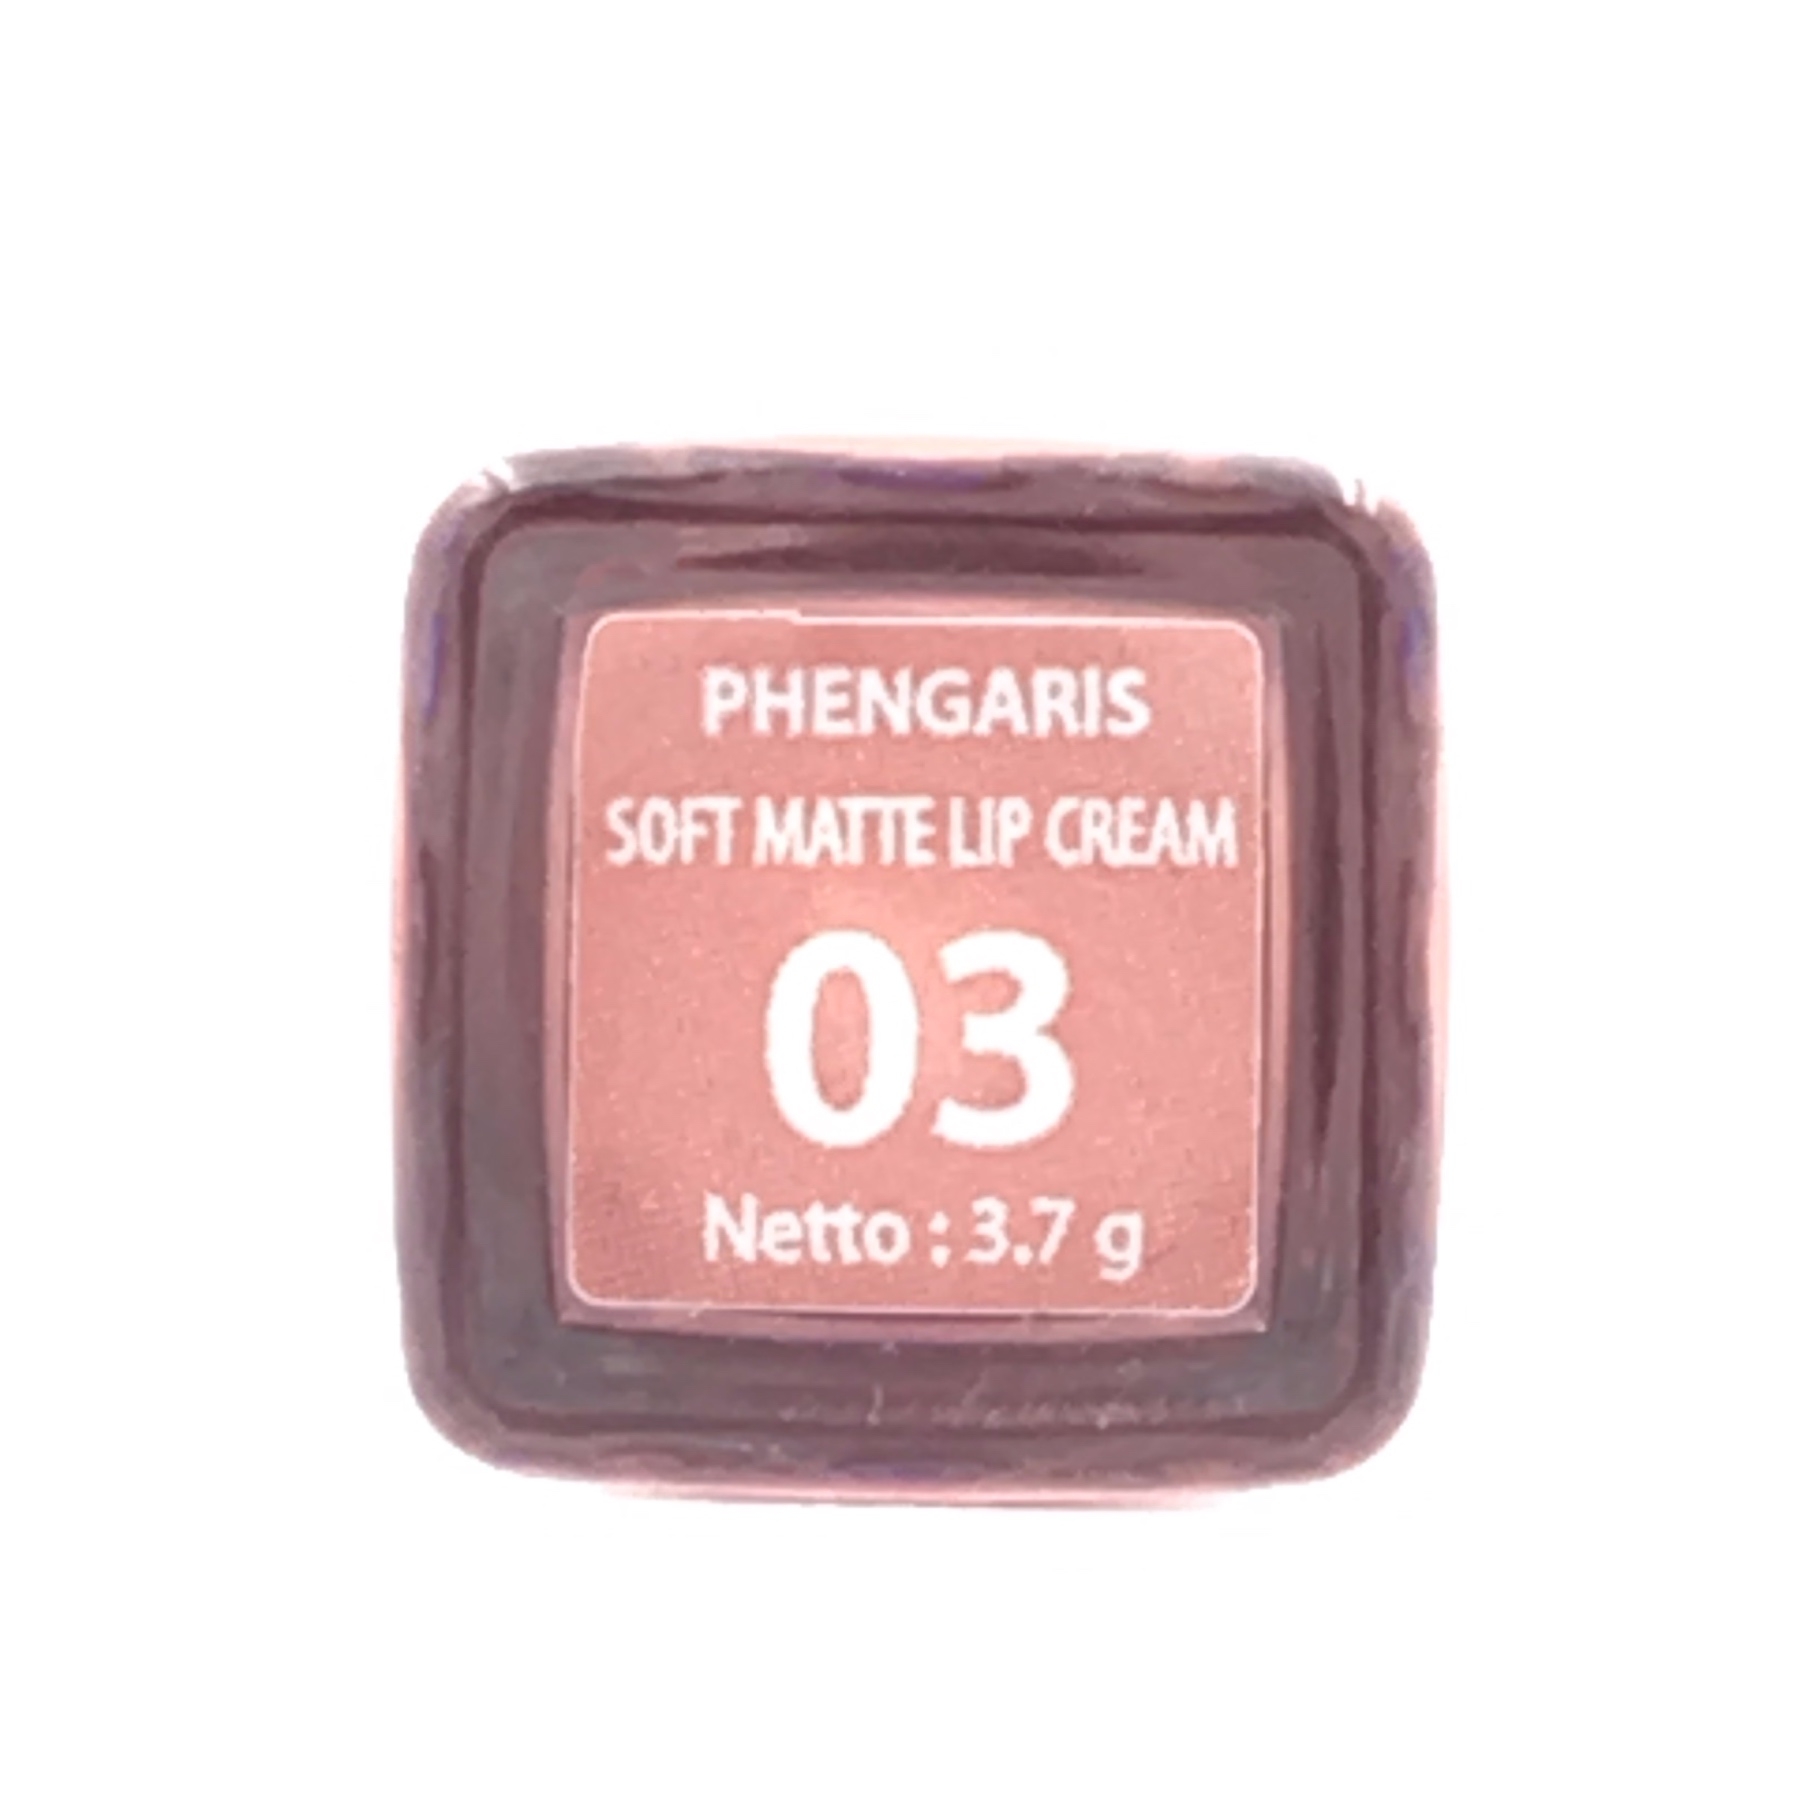 Marcks' Venus Soft Matte Lip Cream Phengaris 03 Lips